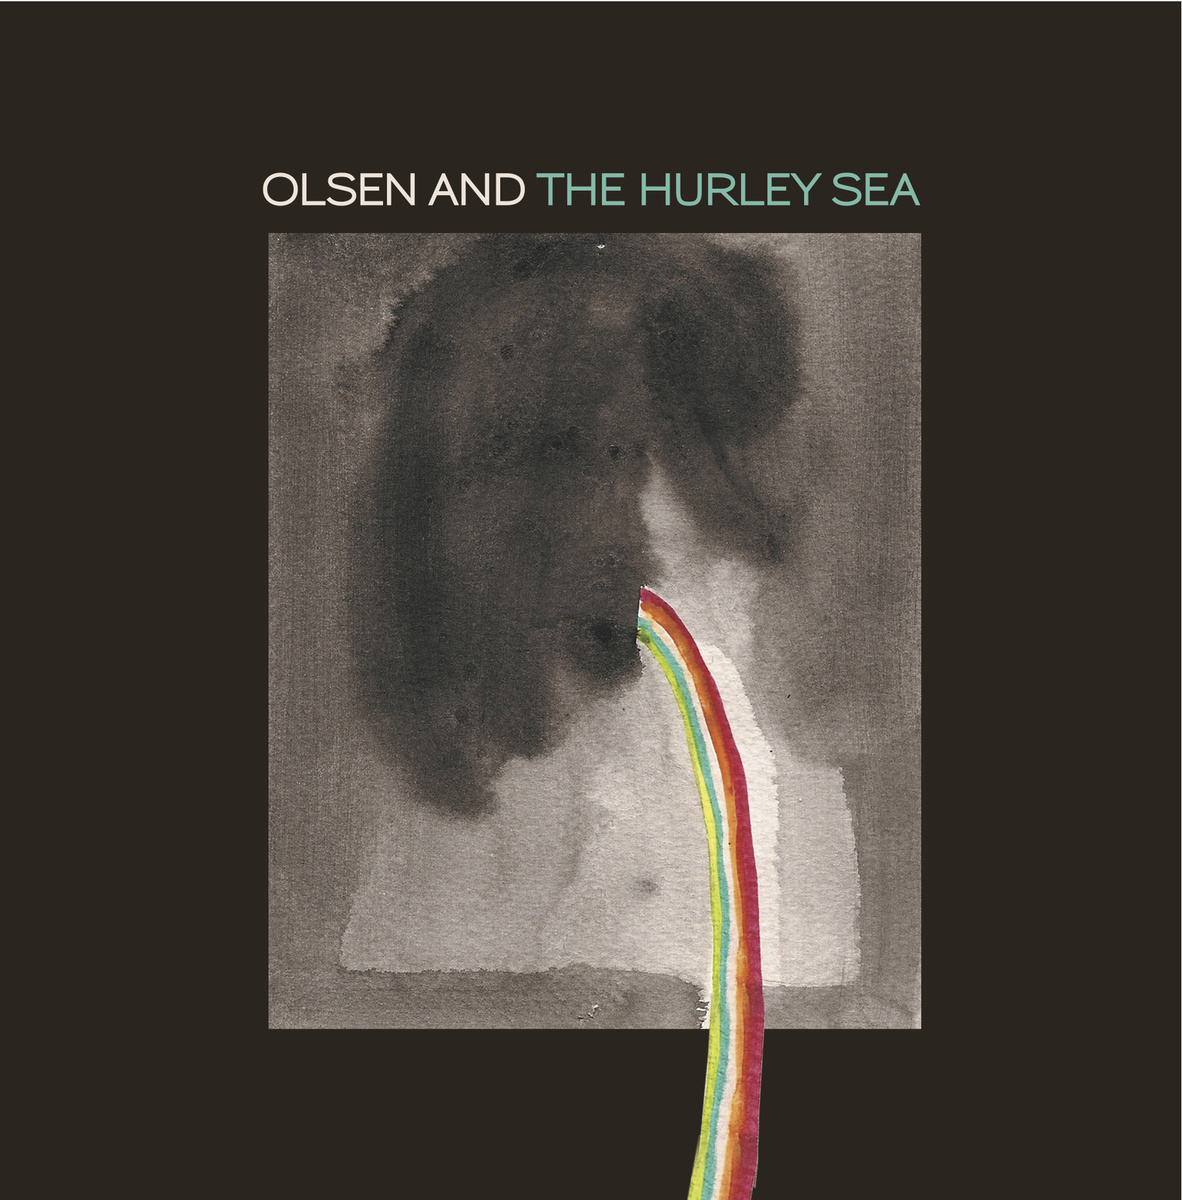 Olsen and the Hurley Sea - The Hurley Sea (YNFND, 2011)